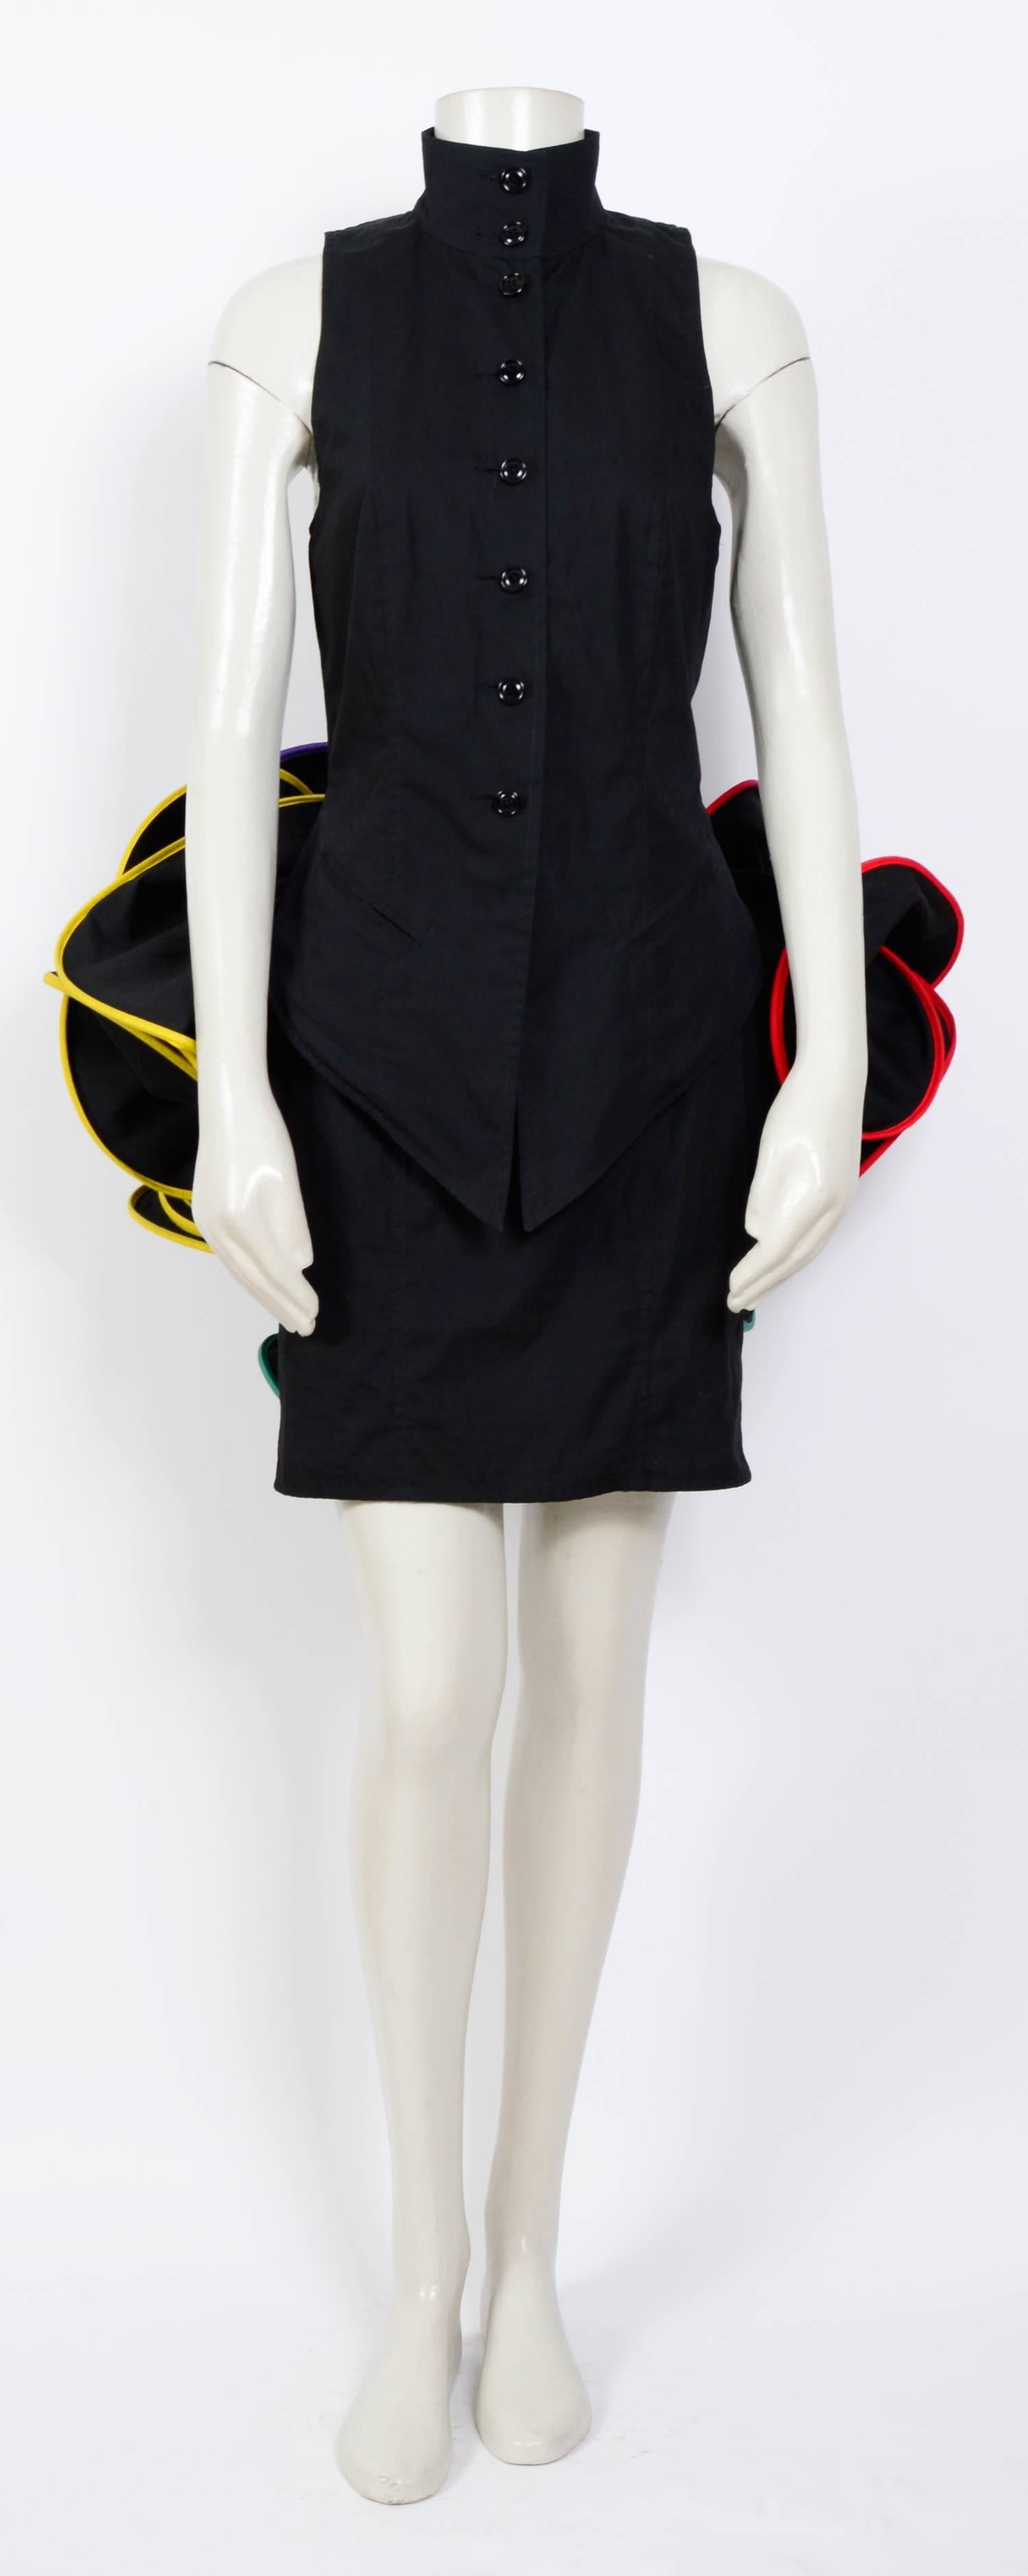 1980's black cotton skirt and gilet set by Popy Moreni.
Measurements taken flat:
Top: Ua to Ua 16inch/41cm - Waist 14inch/36cm
Skirt: Waist 13inch/33cm - Hip 18inch/46cm